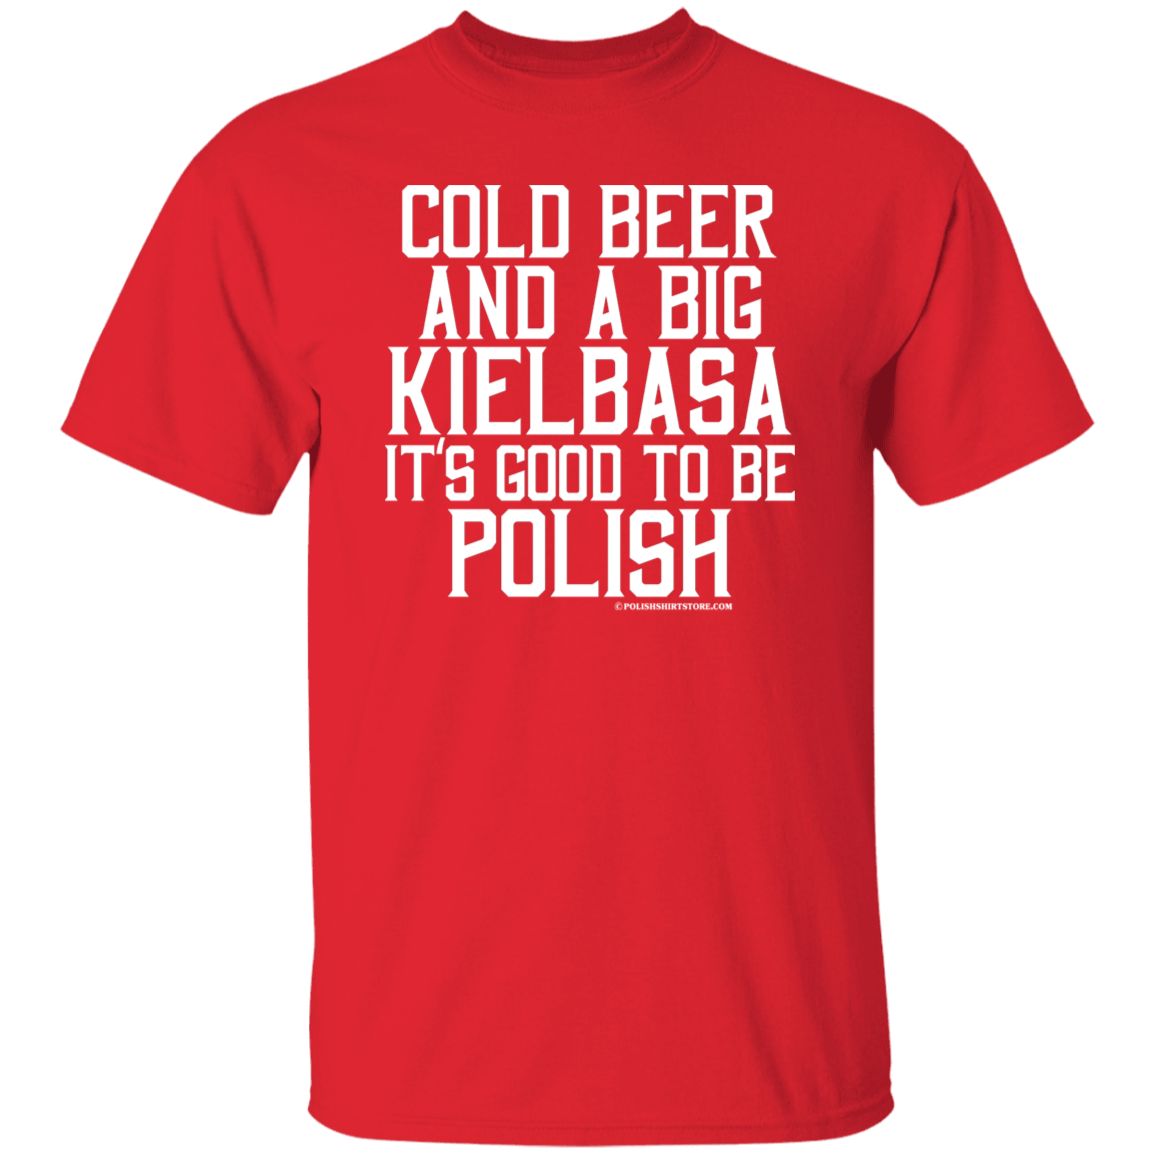 Cold Beer And A Big Kielbasa It's Good To Be Polish Apparel CustomCat G500 5.3 oz. T-Shirt Red S